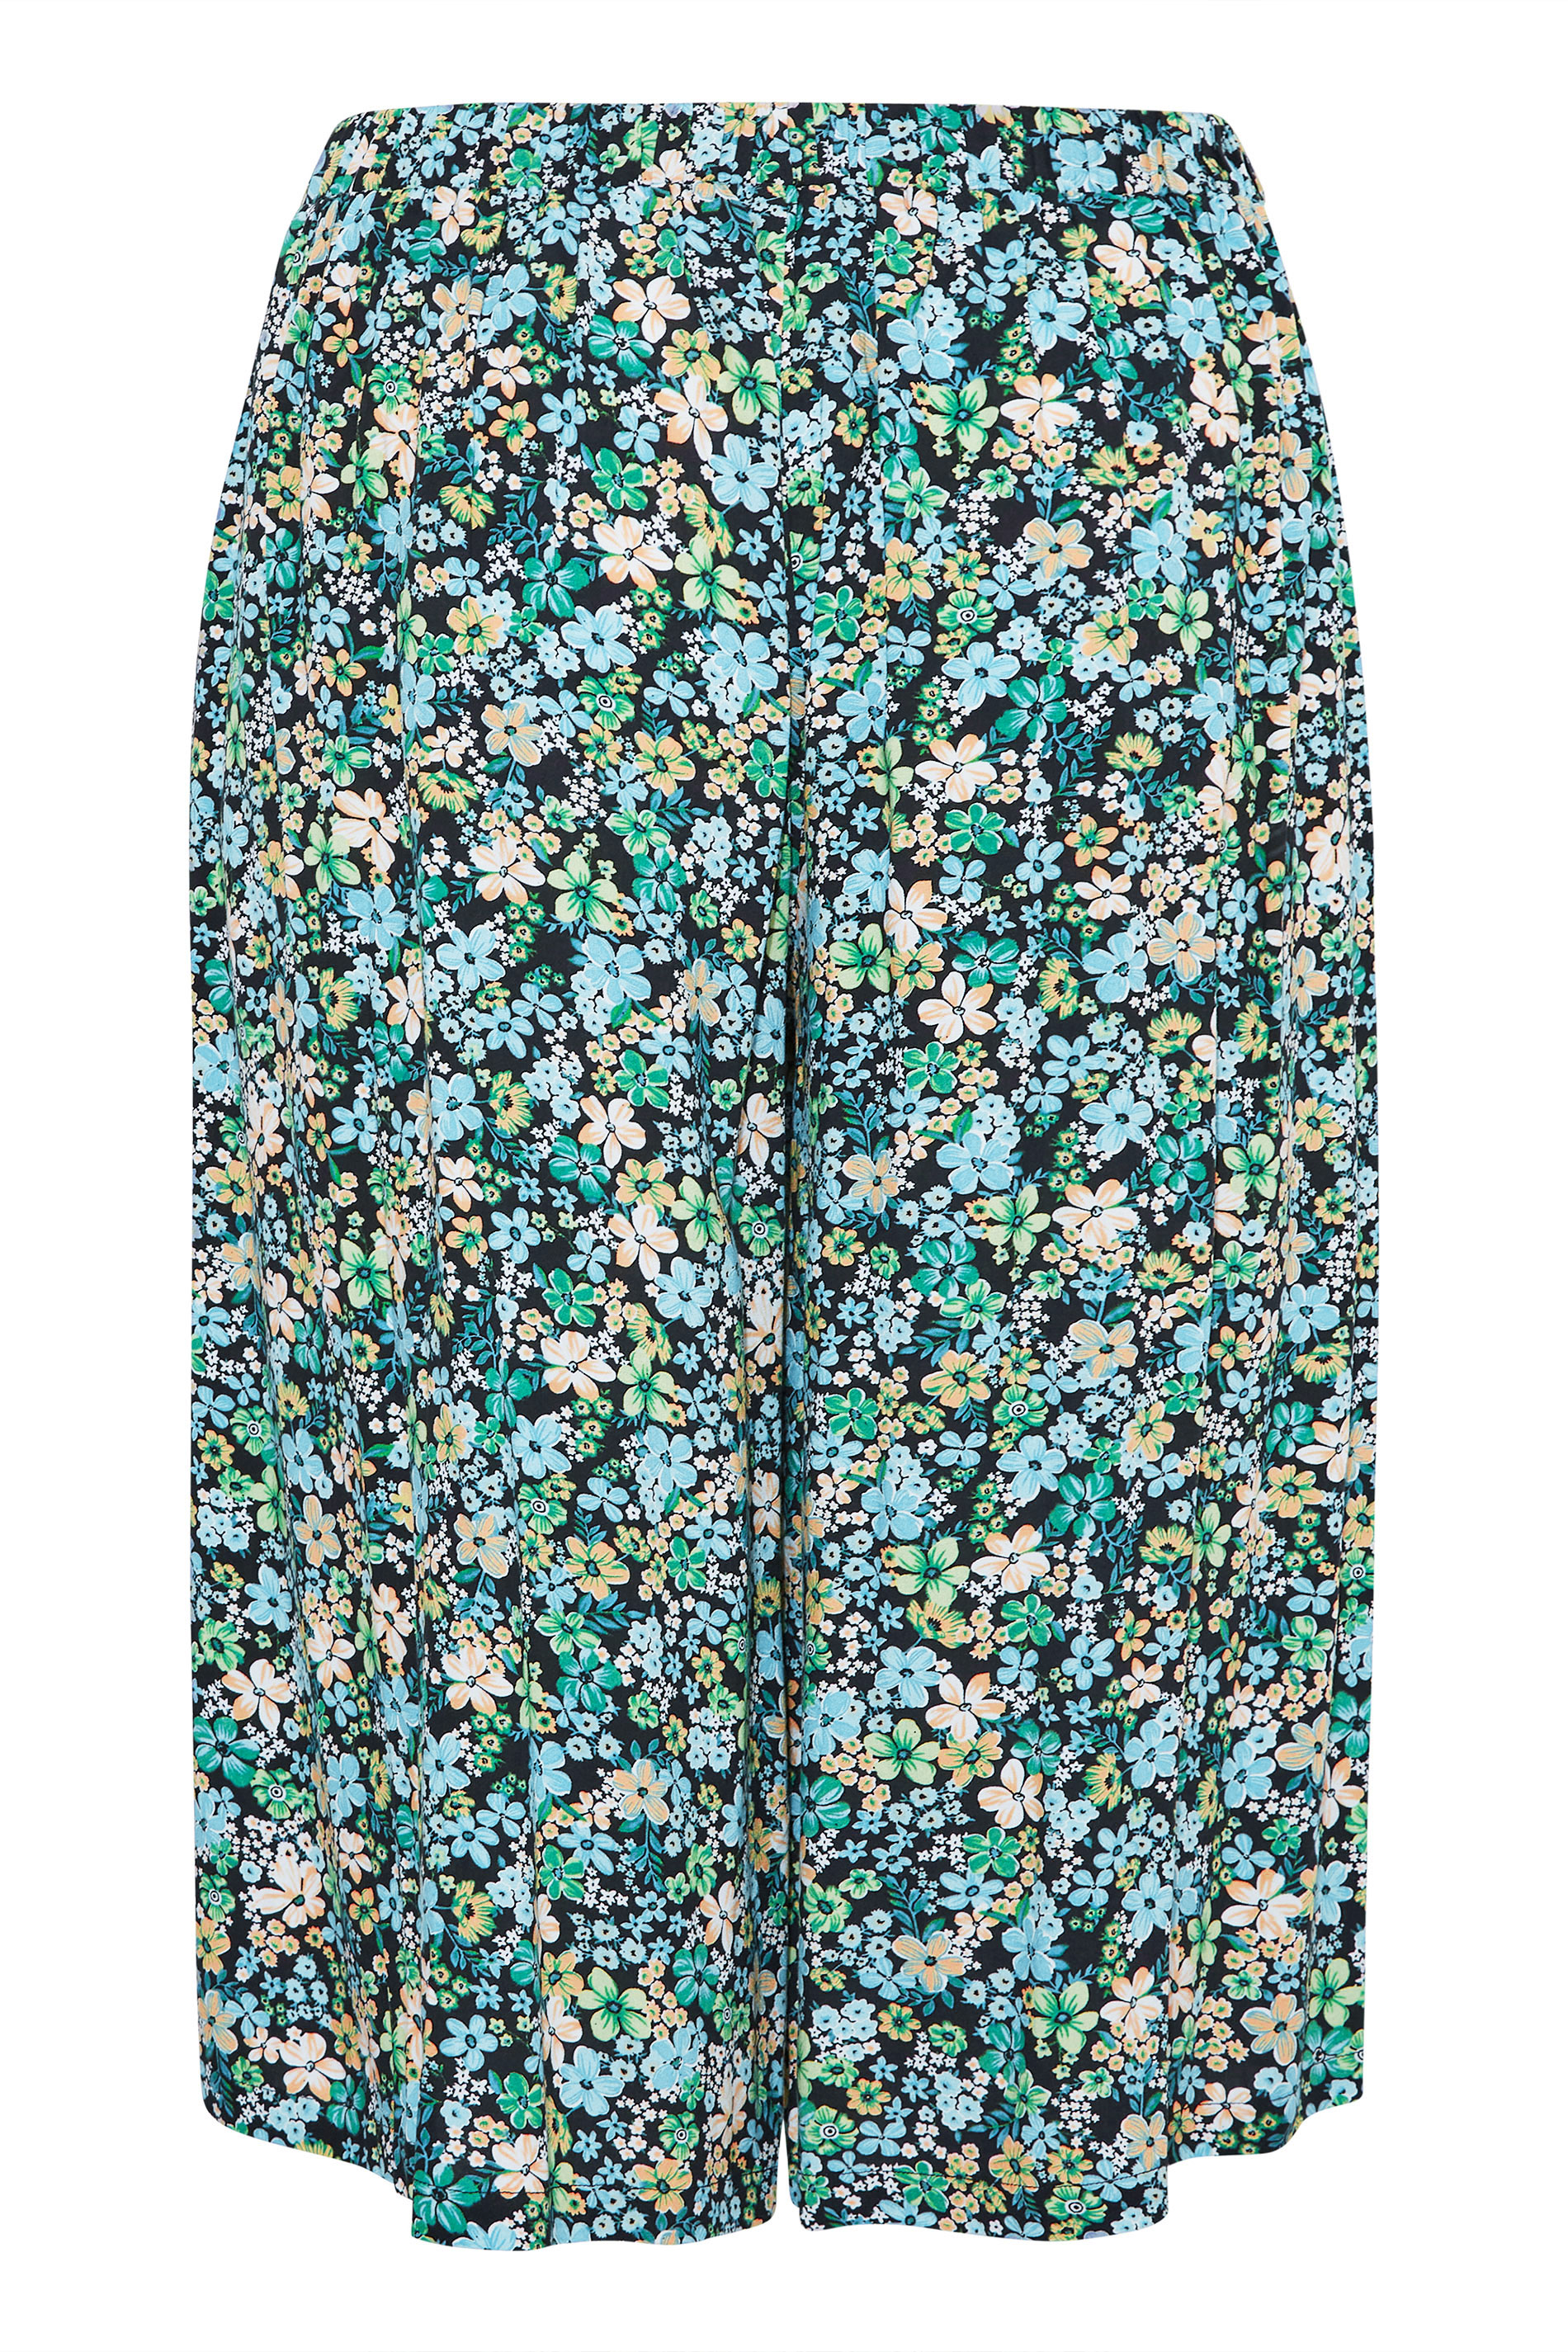 Grande taille  Pantalons Grande taille  Pantacourts | Jupe-Culotte Bleu & Vert Design Floral - CH64315